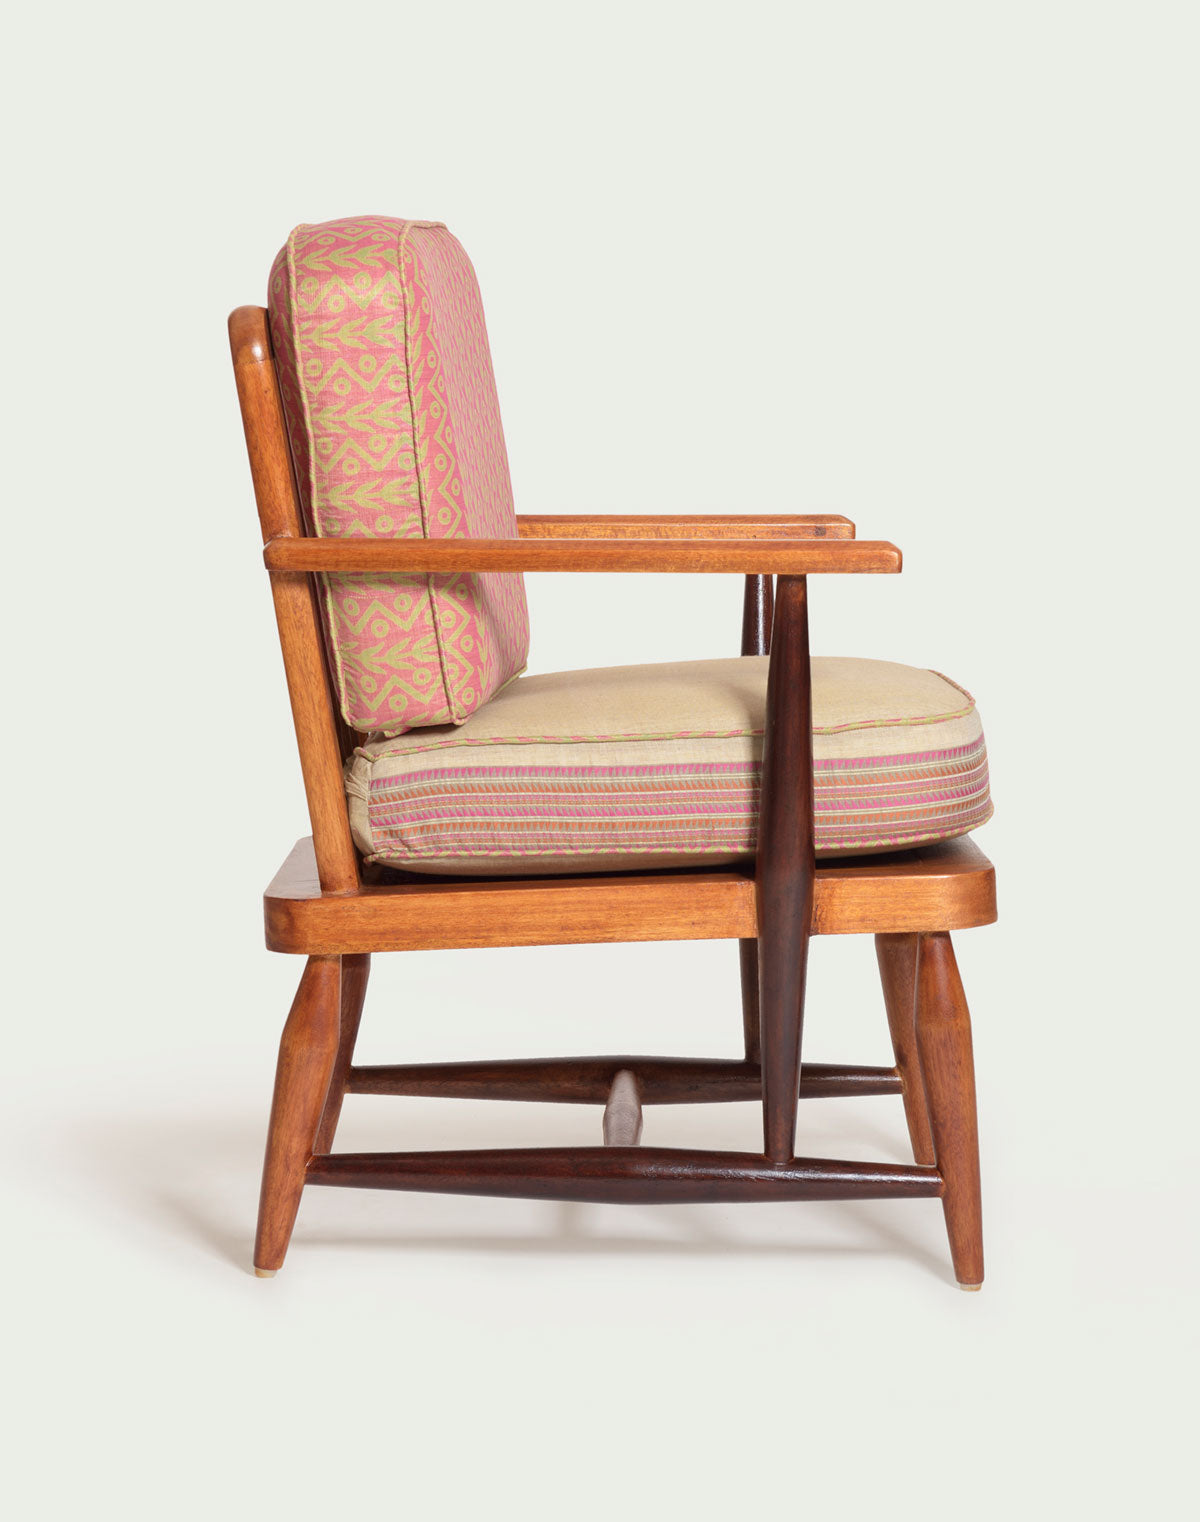 The Edwin Sari Club Chair